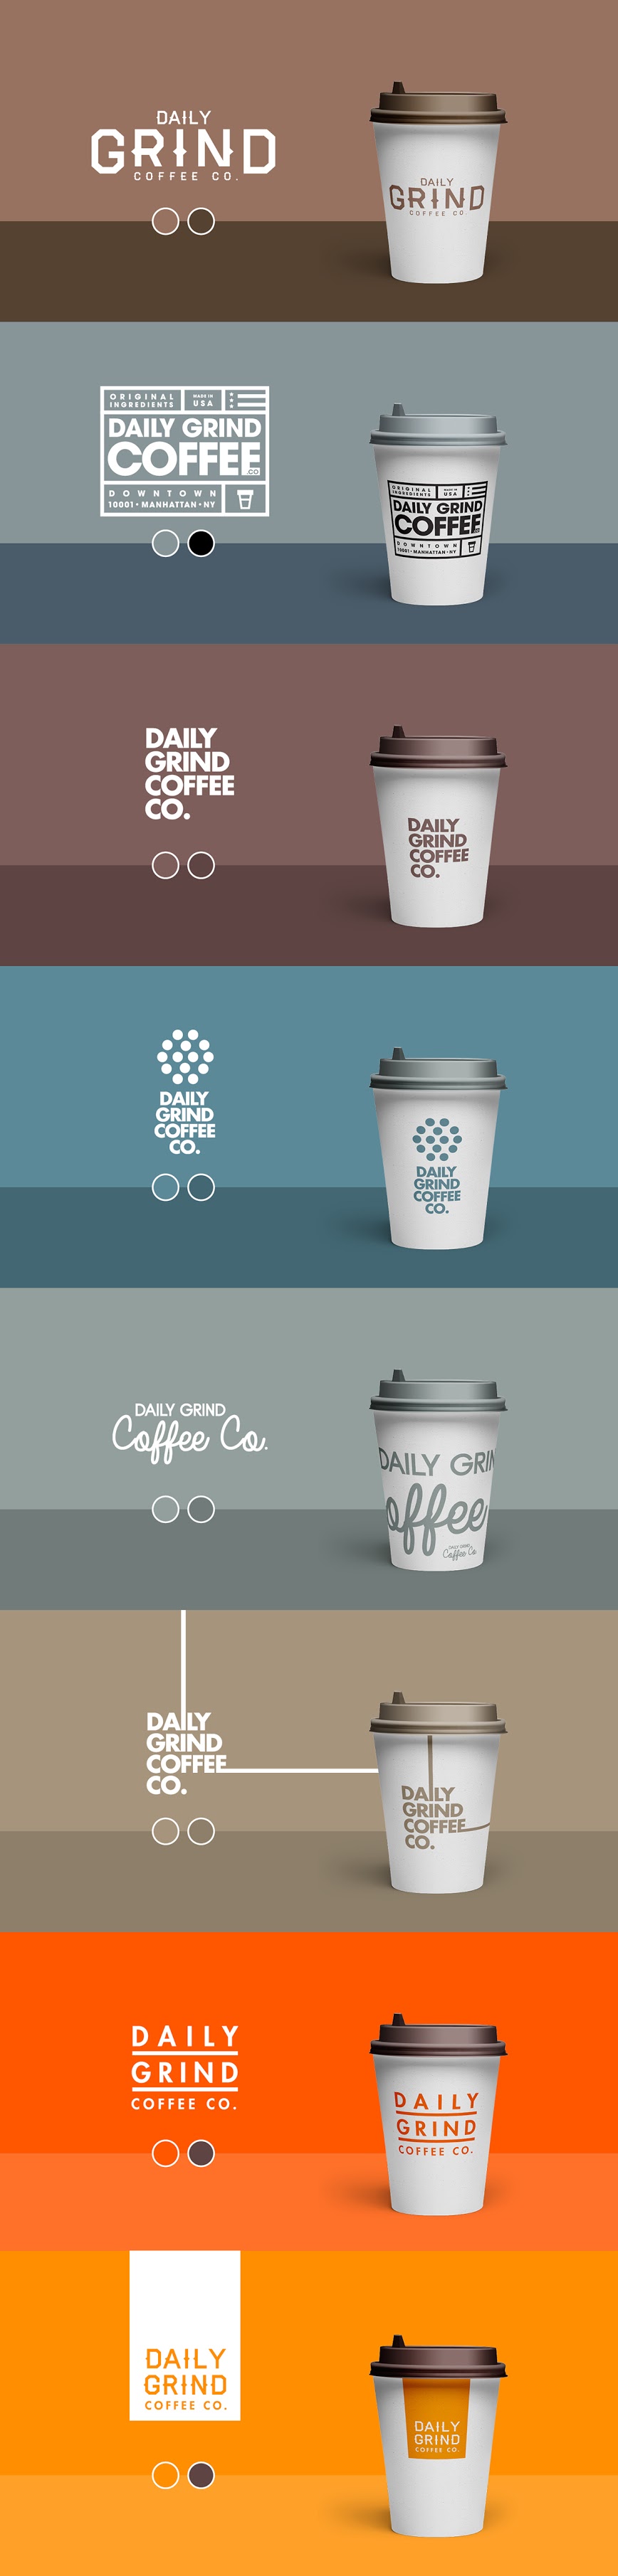 Daily Grind咖啡品牌和包装设计